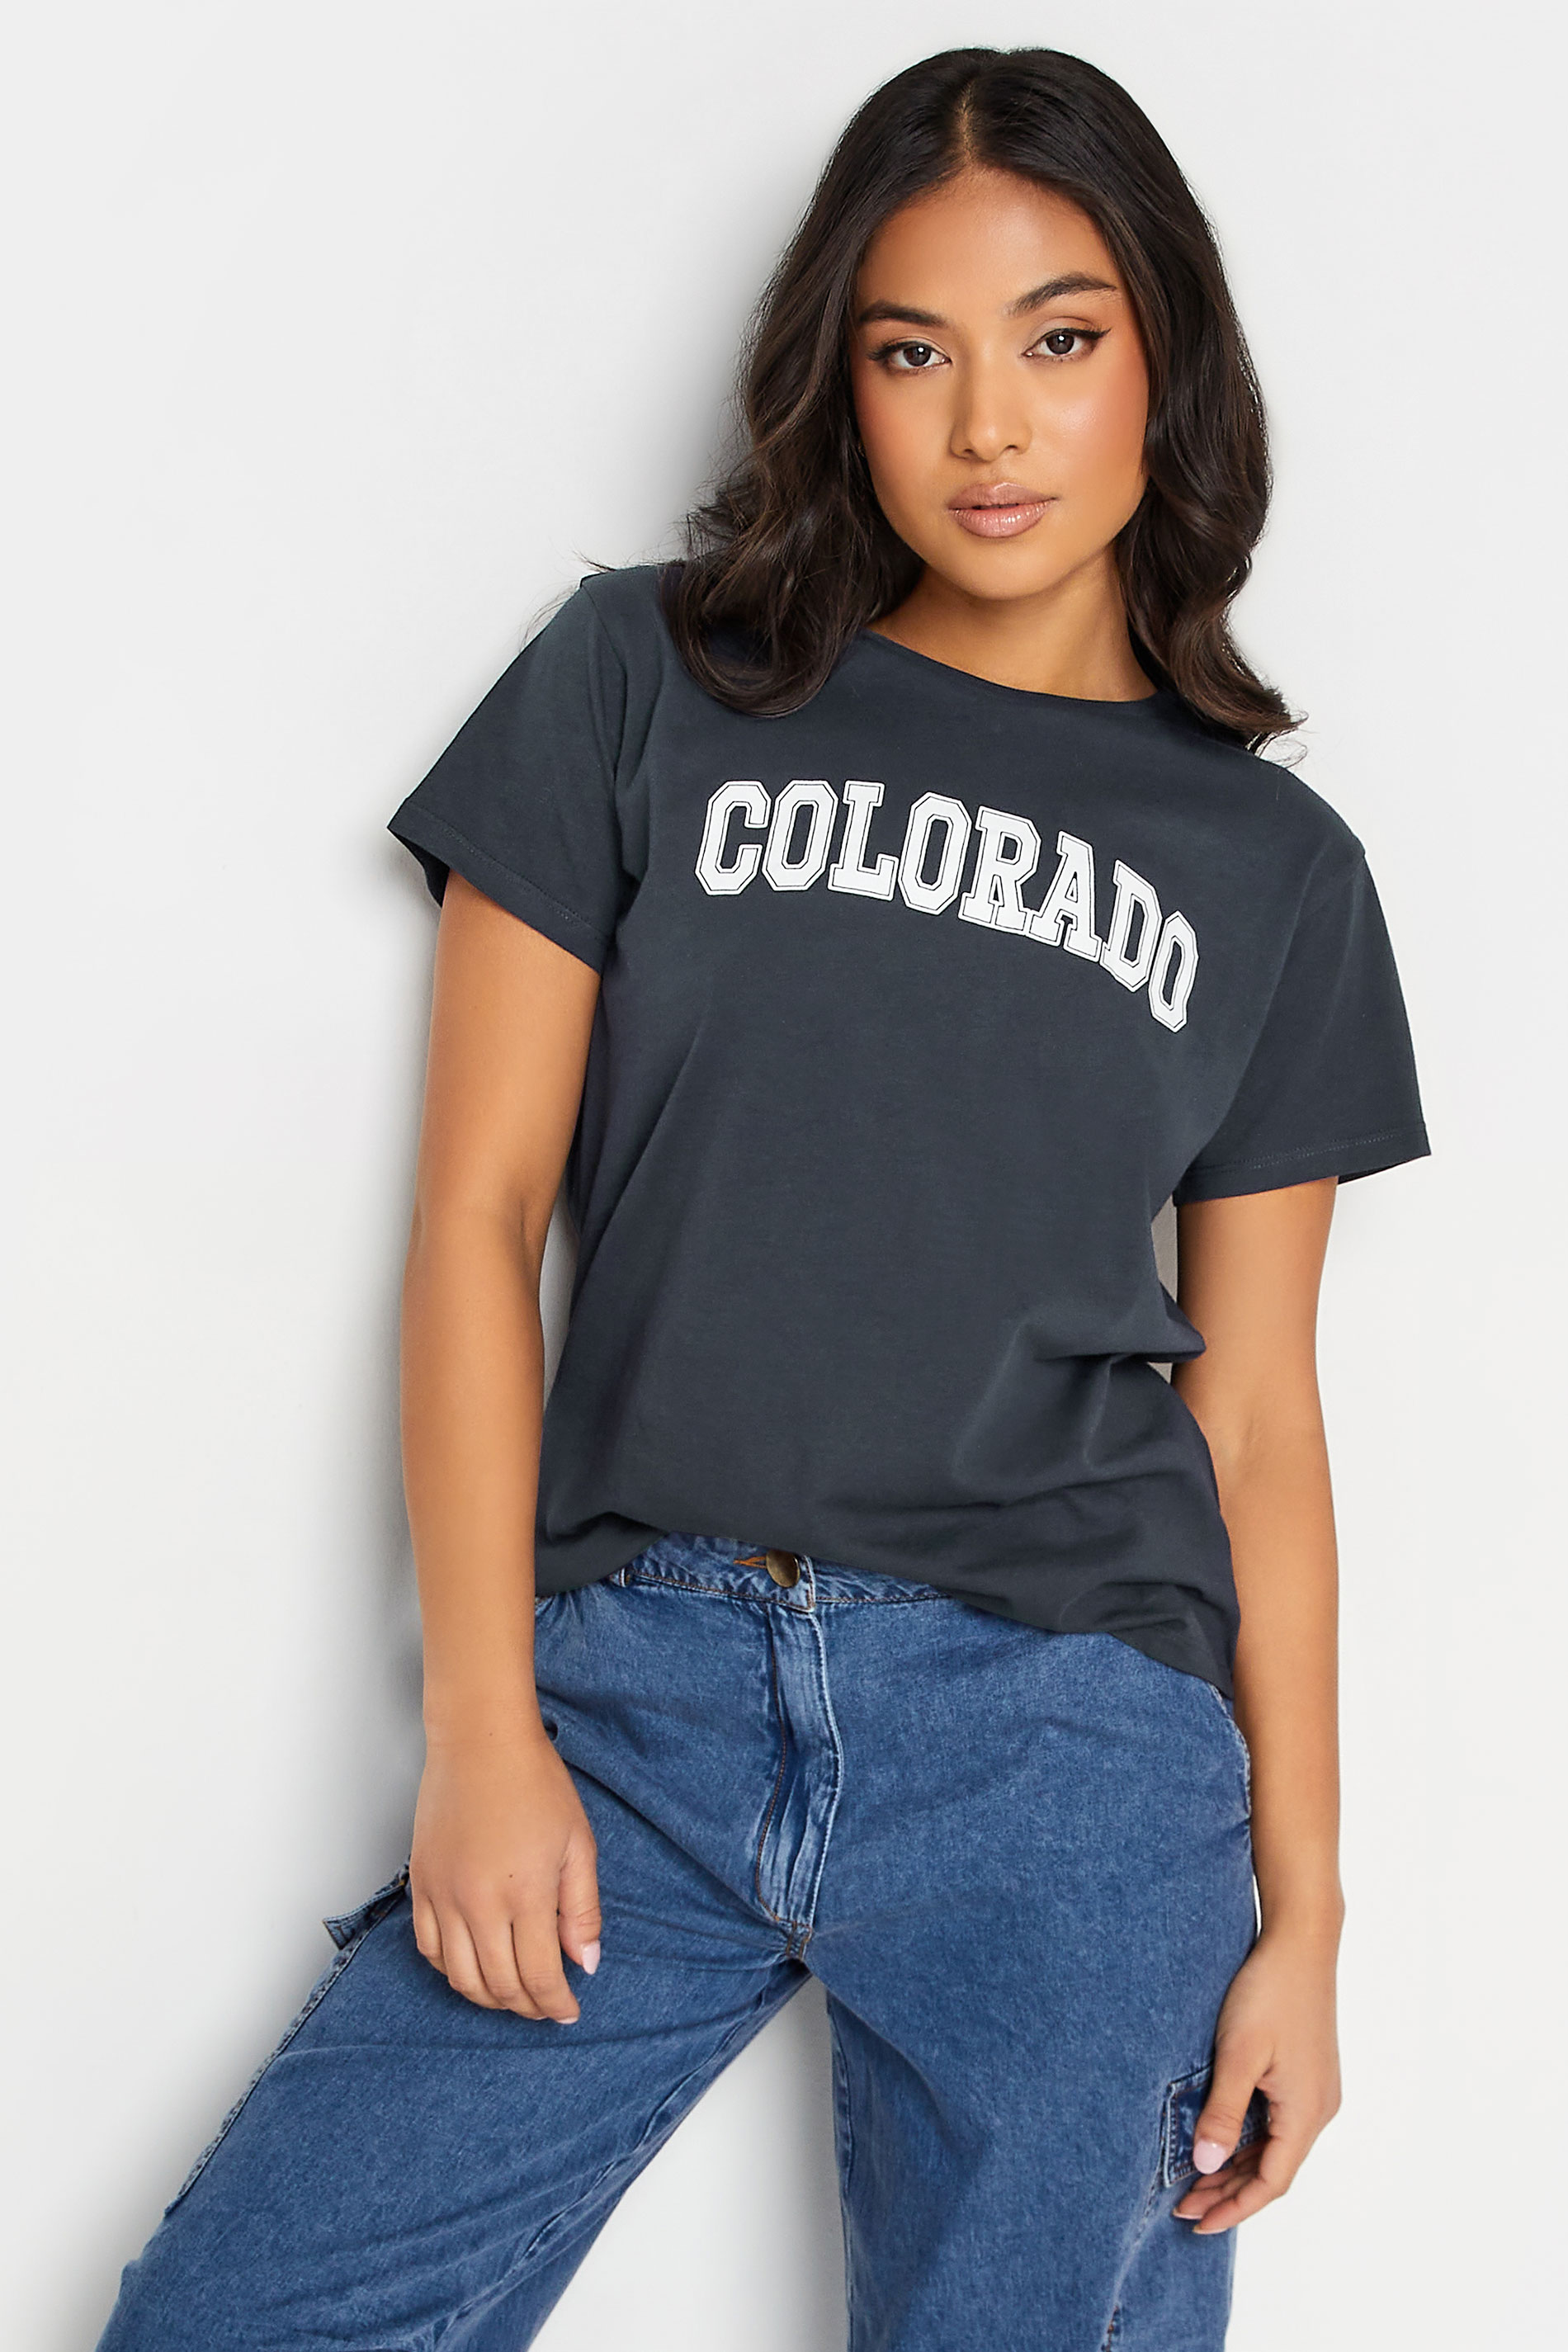 PixieGirl Navy Blue 'Colorado' Slogan T-Shirt | PixieGirl 1